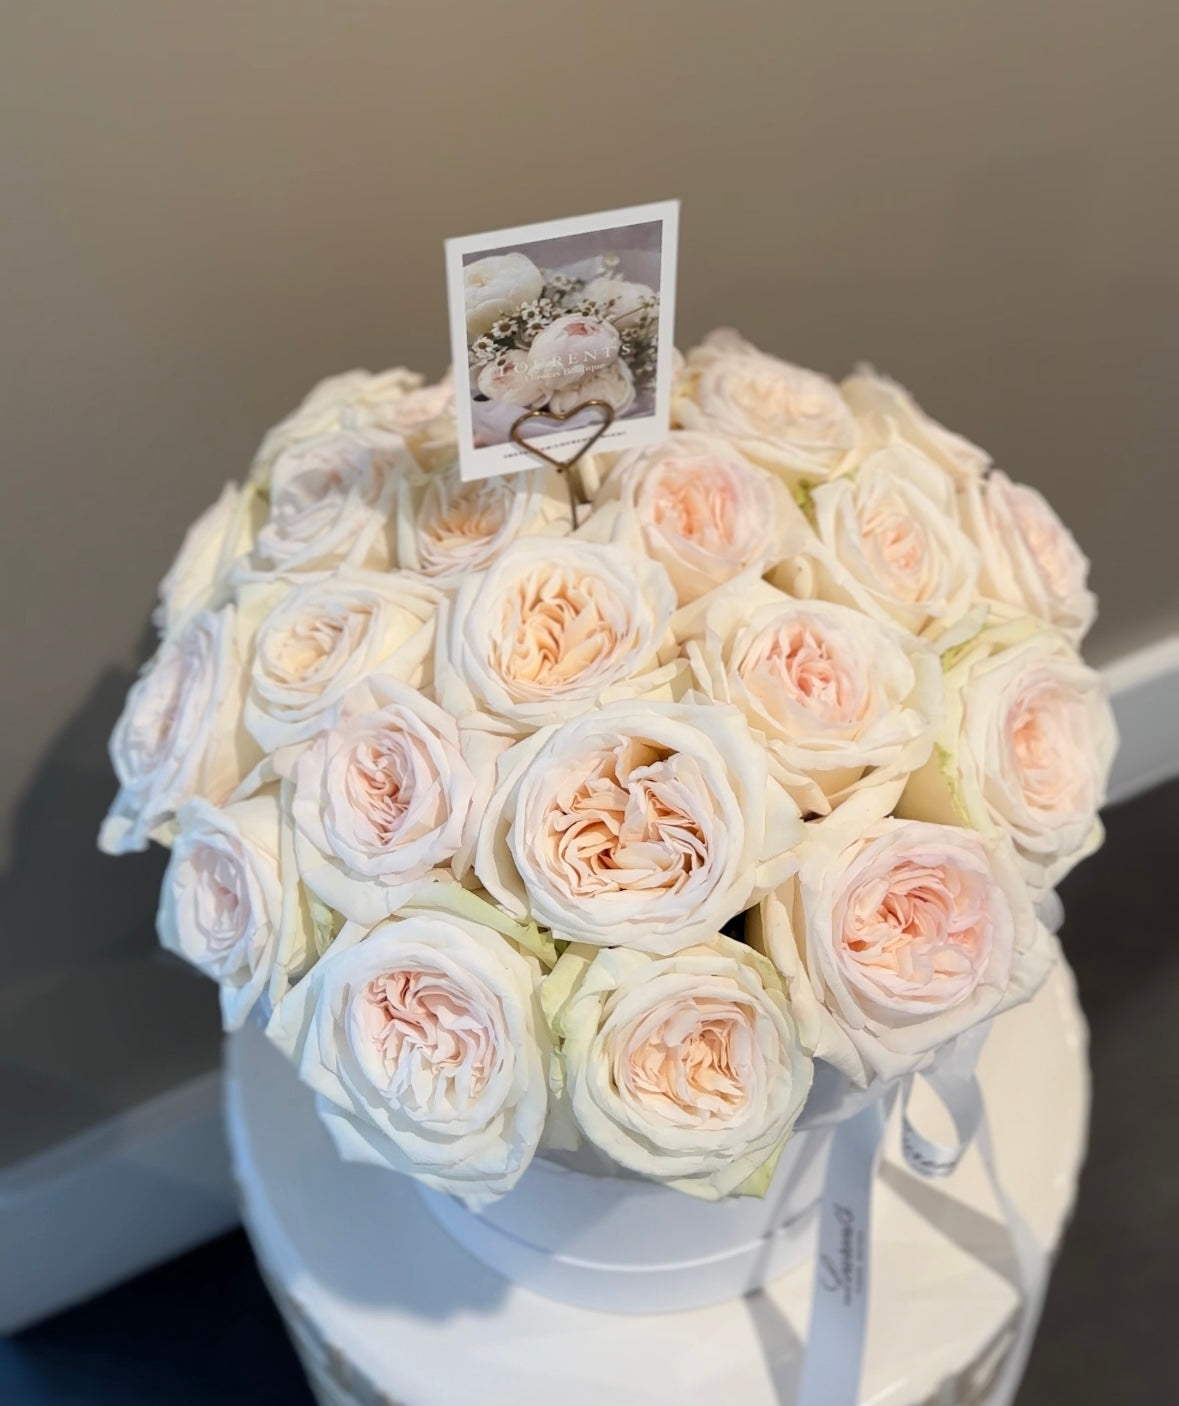 Flower box “Mono White O’hara roses”